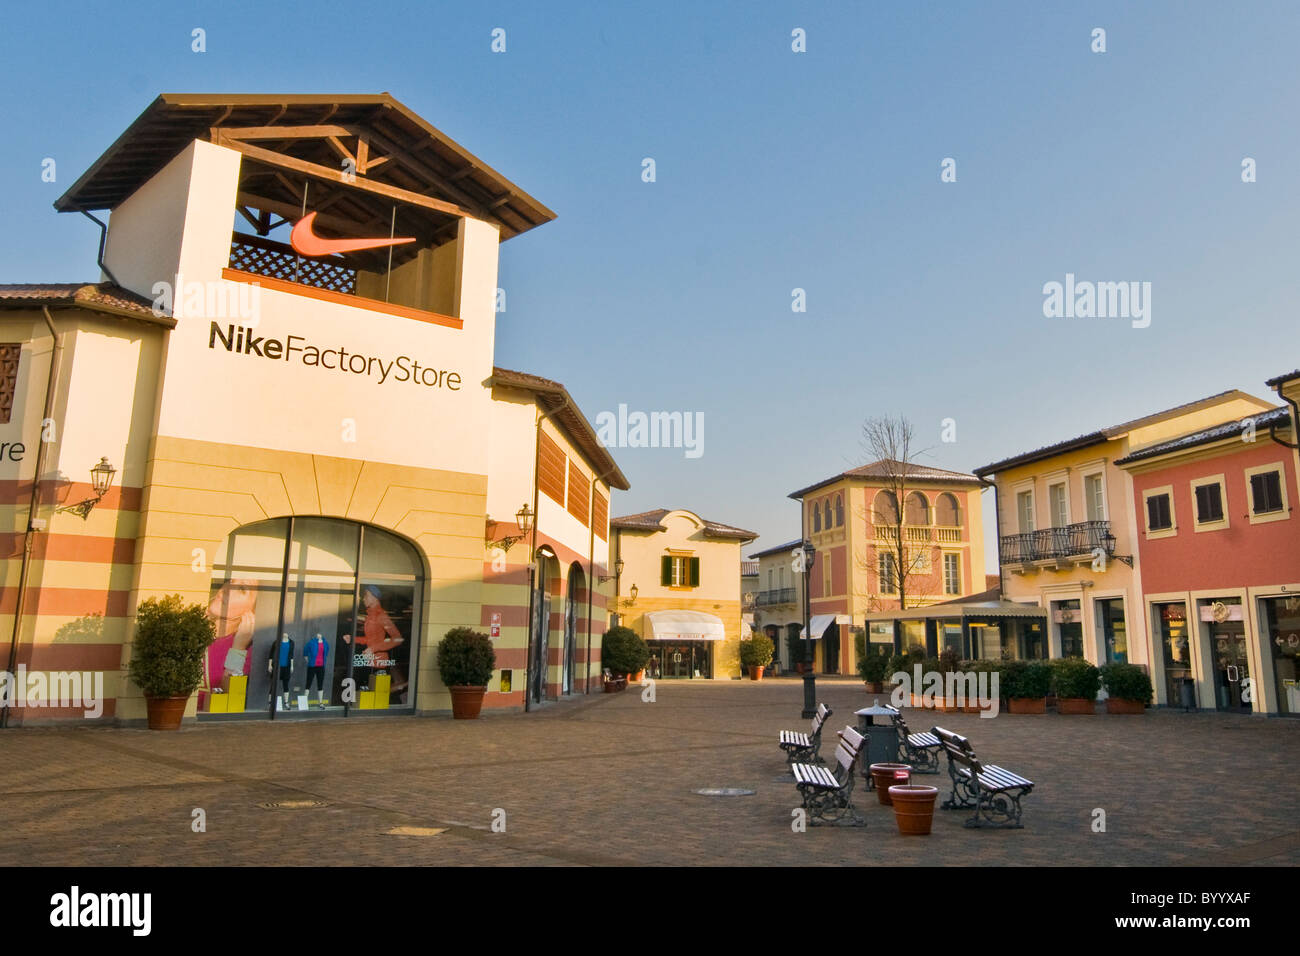 Nike Factory store, Designer Outlet Serravalle Scrivia, Provinz  Alessandria, Italien Stockfotografie - Alamy